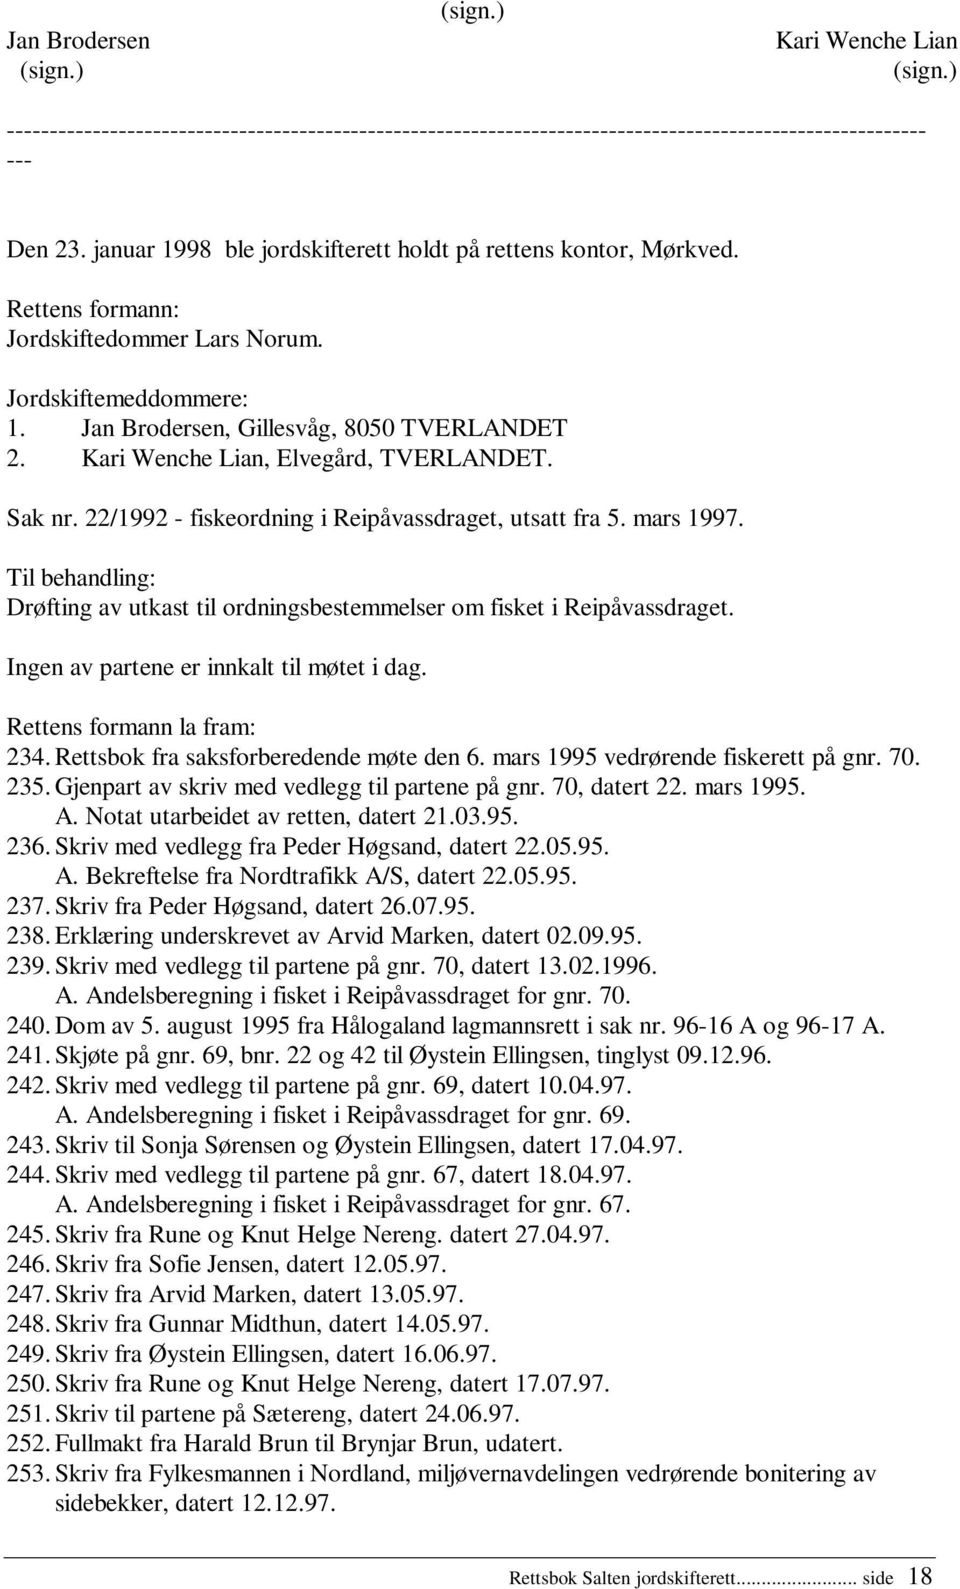 Rettsbok for Salten jordskifterett - PDF Free Download